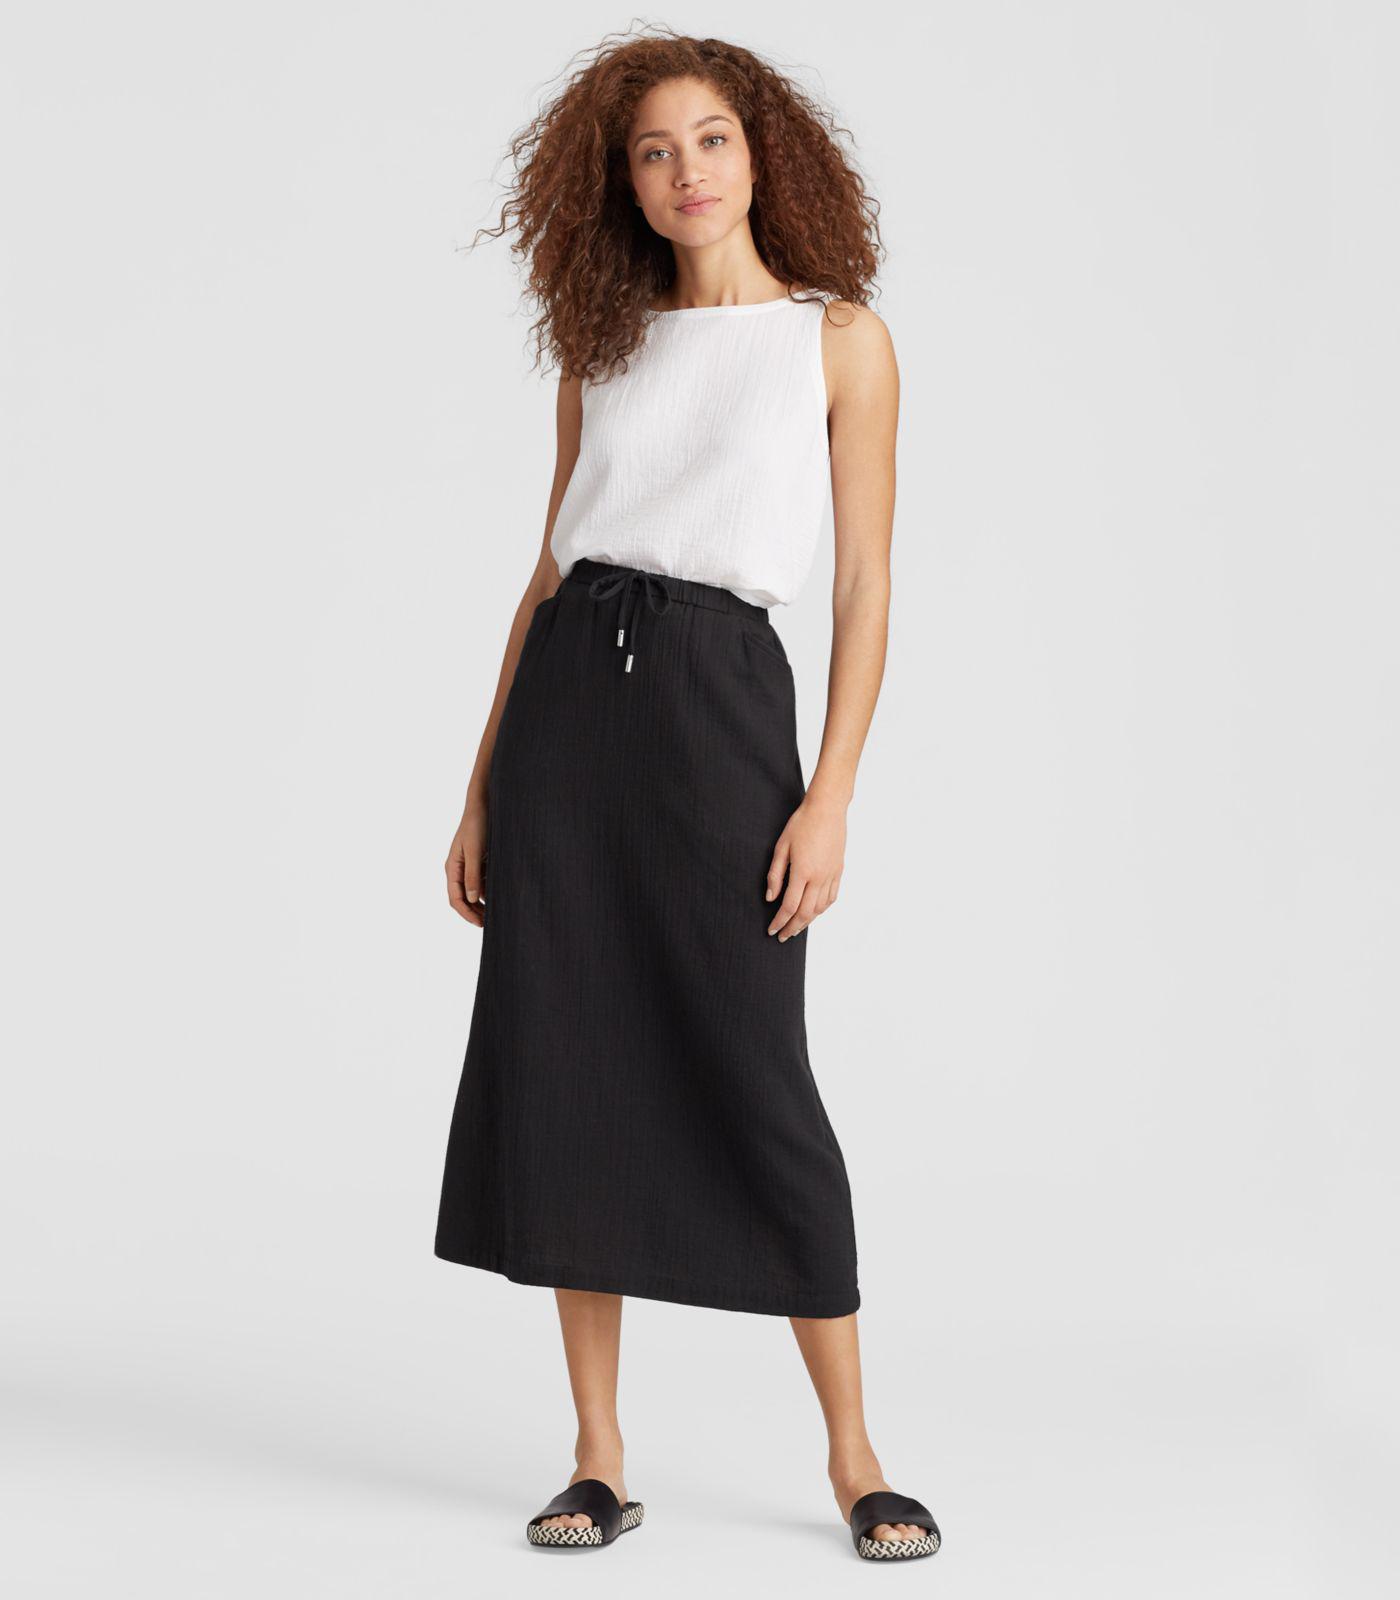 Details about   PL Eileen Fisher BLACK Crinkled Organic Cotton Gauze Gathered K/L Skirt  $178